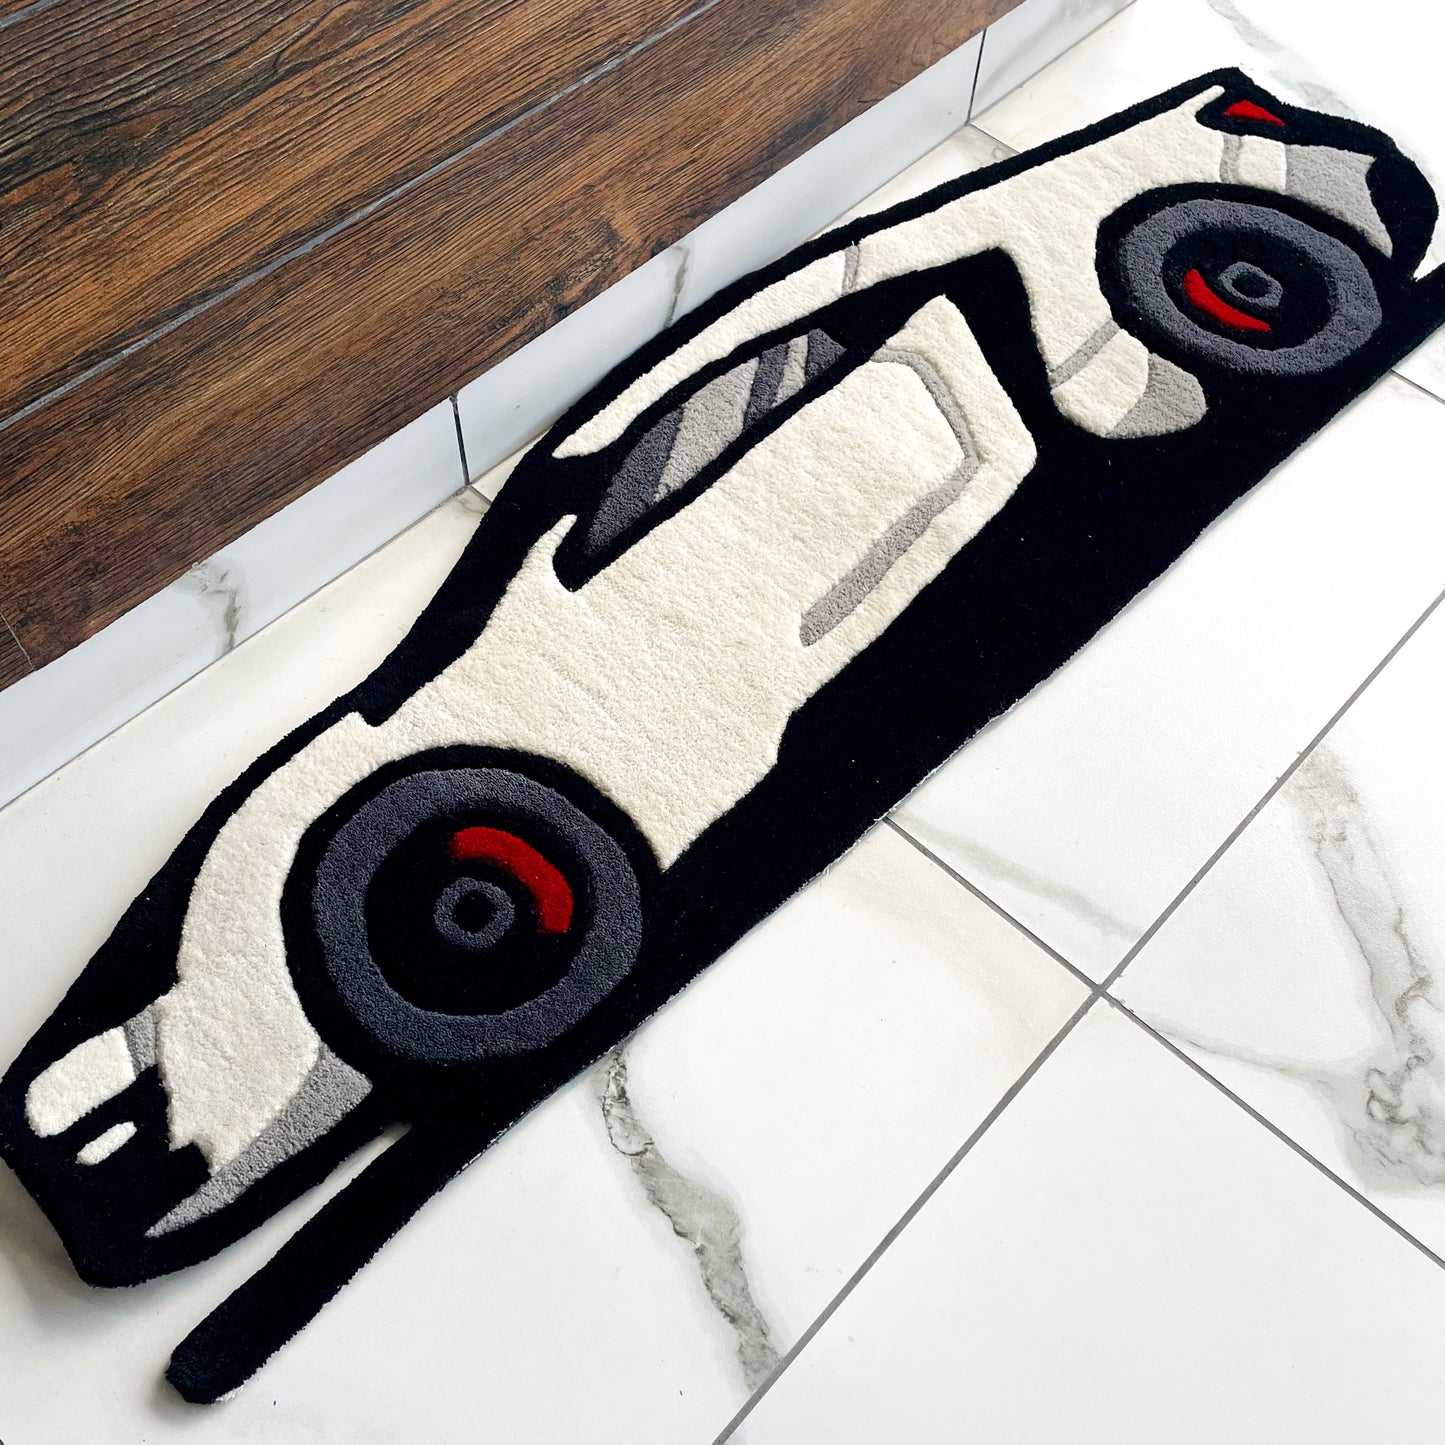 Lykan HyperSport Car Hand-Tufted Rug